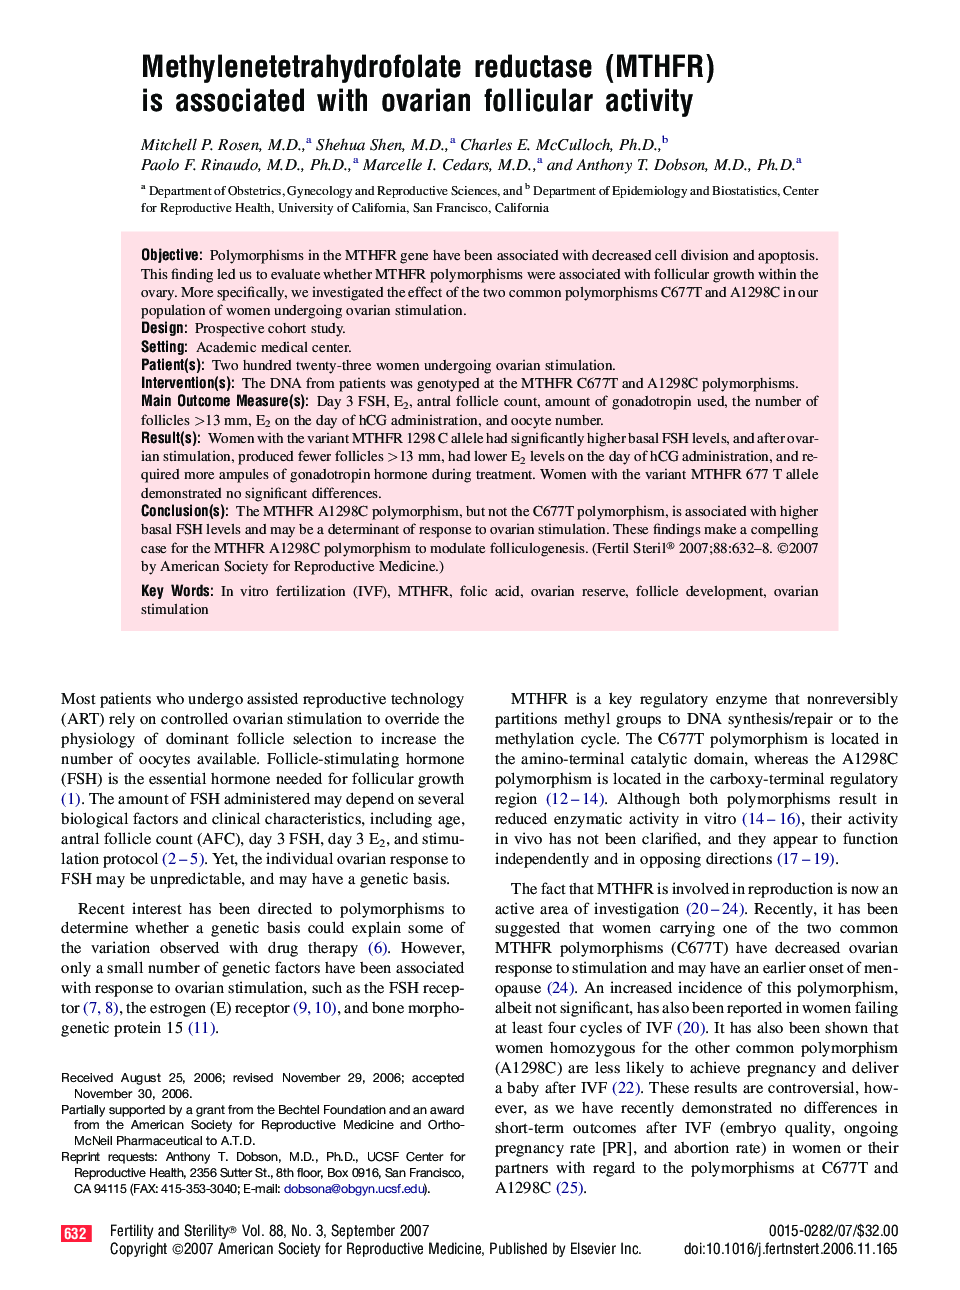 Methylenetetrahydrofolate reductase (MTHFR) is associated with ovarian follicular activity 